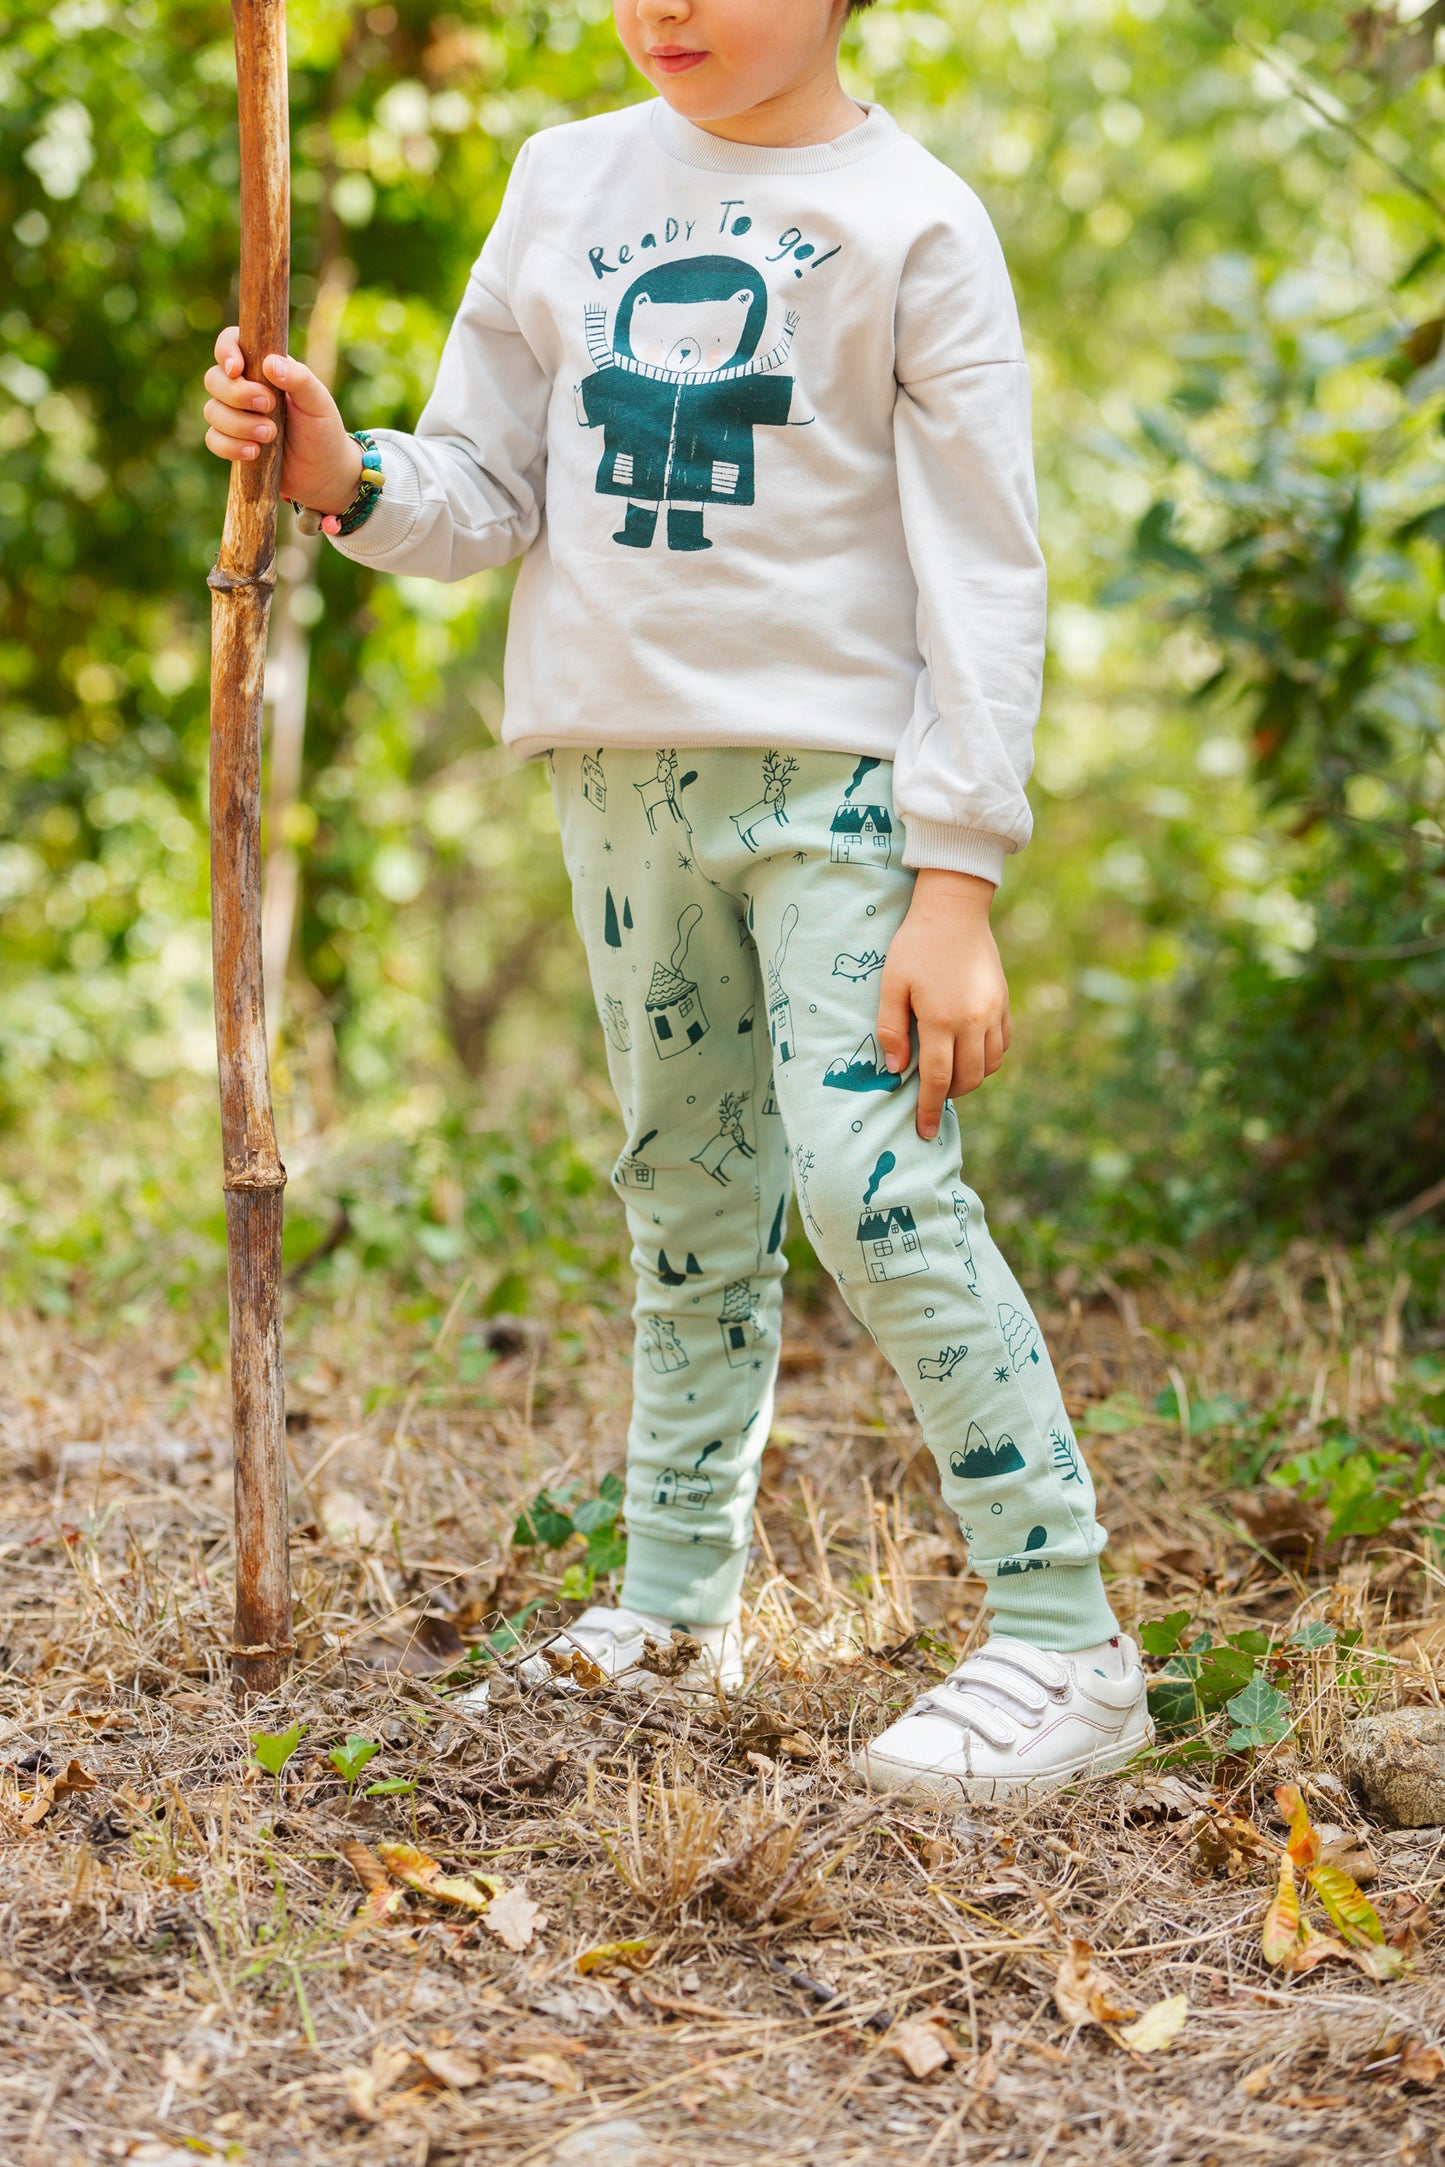 Organic cotton "Grow" Sweatshirt -  Aged 6m to 7 Yrs- Colored Light Grey